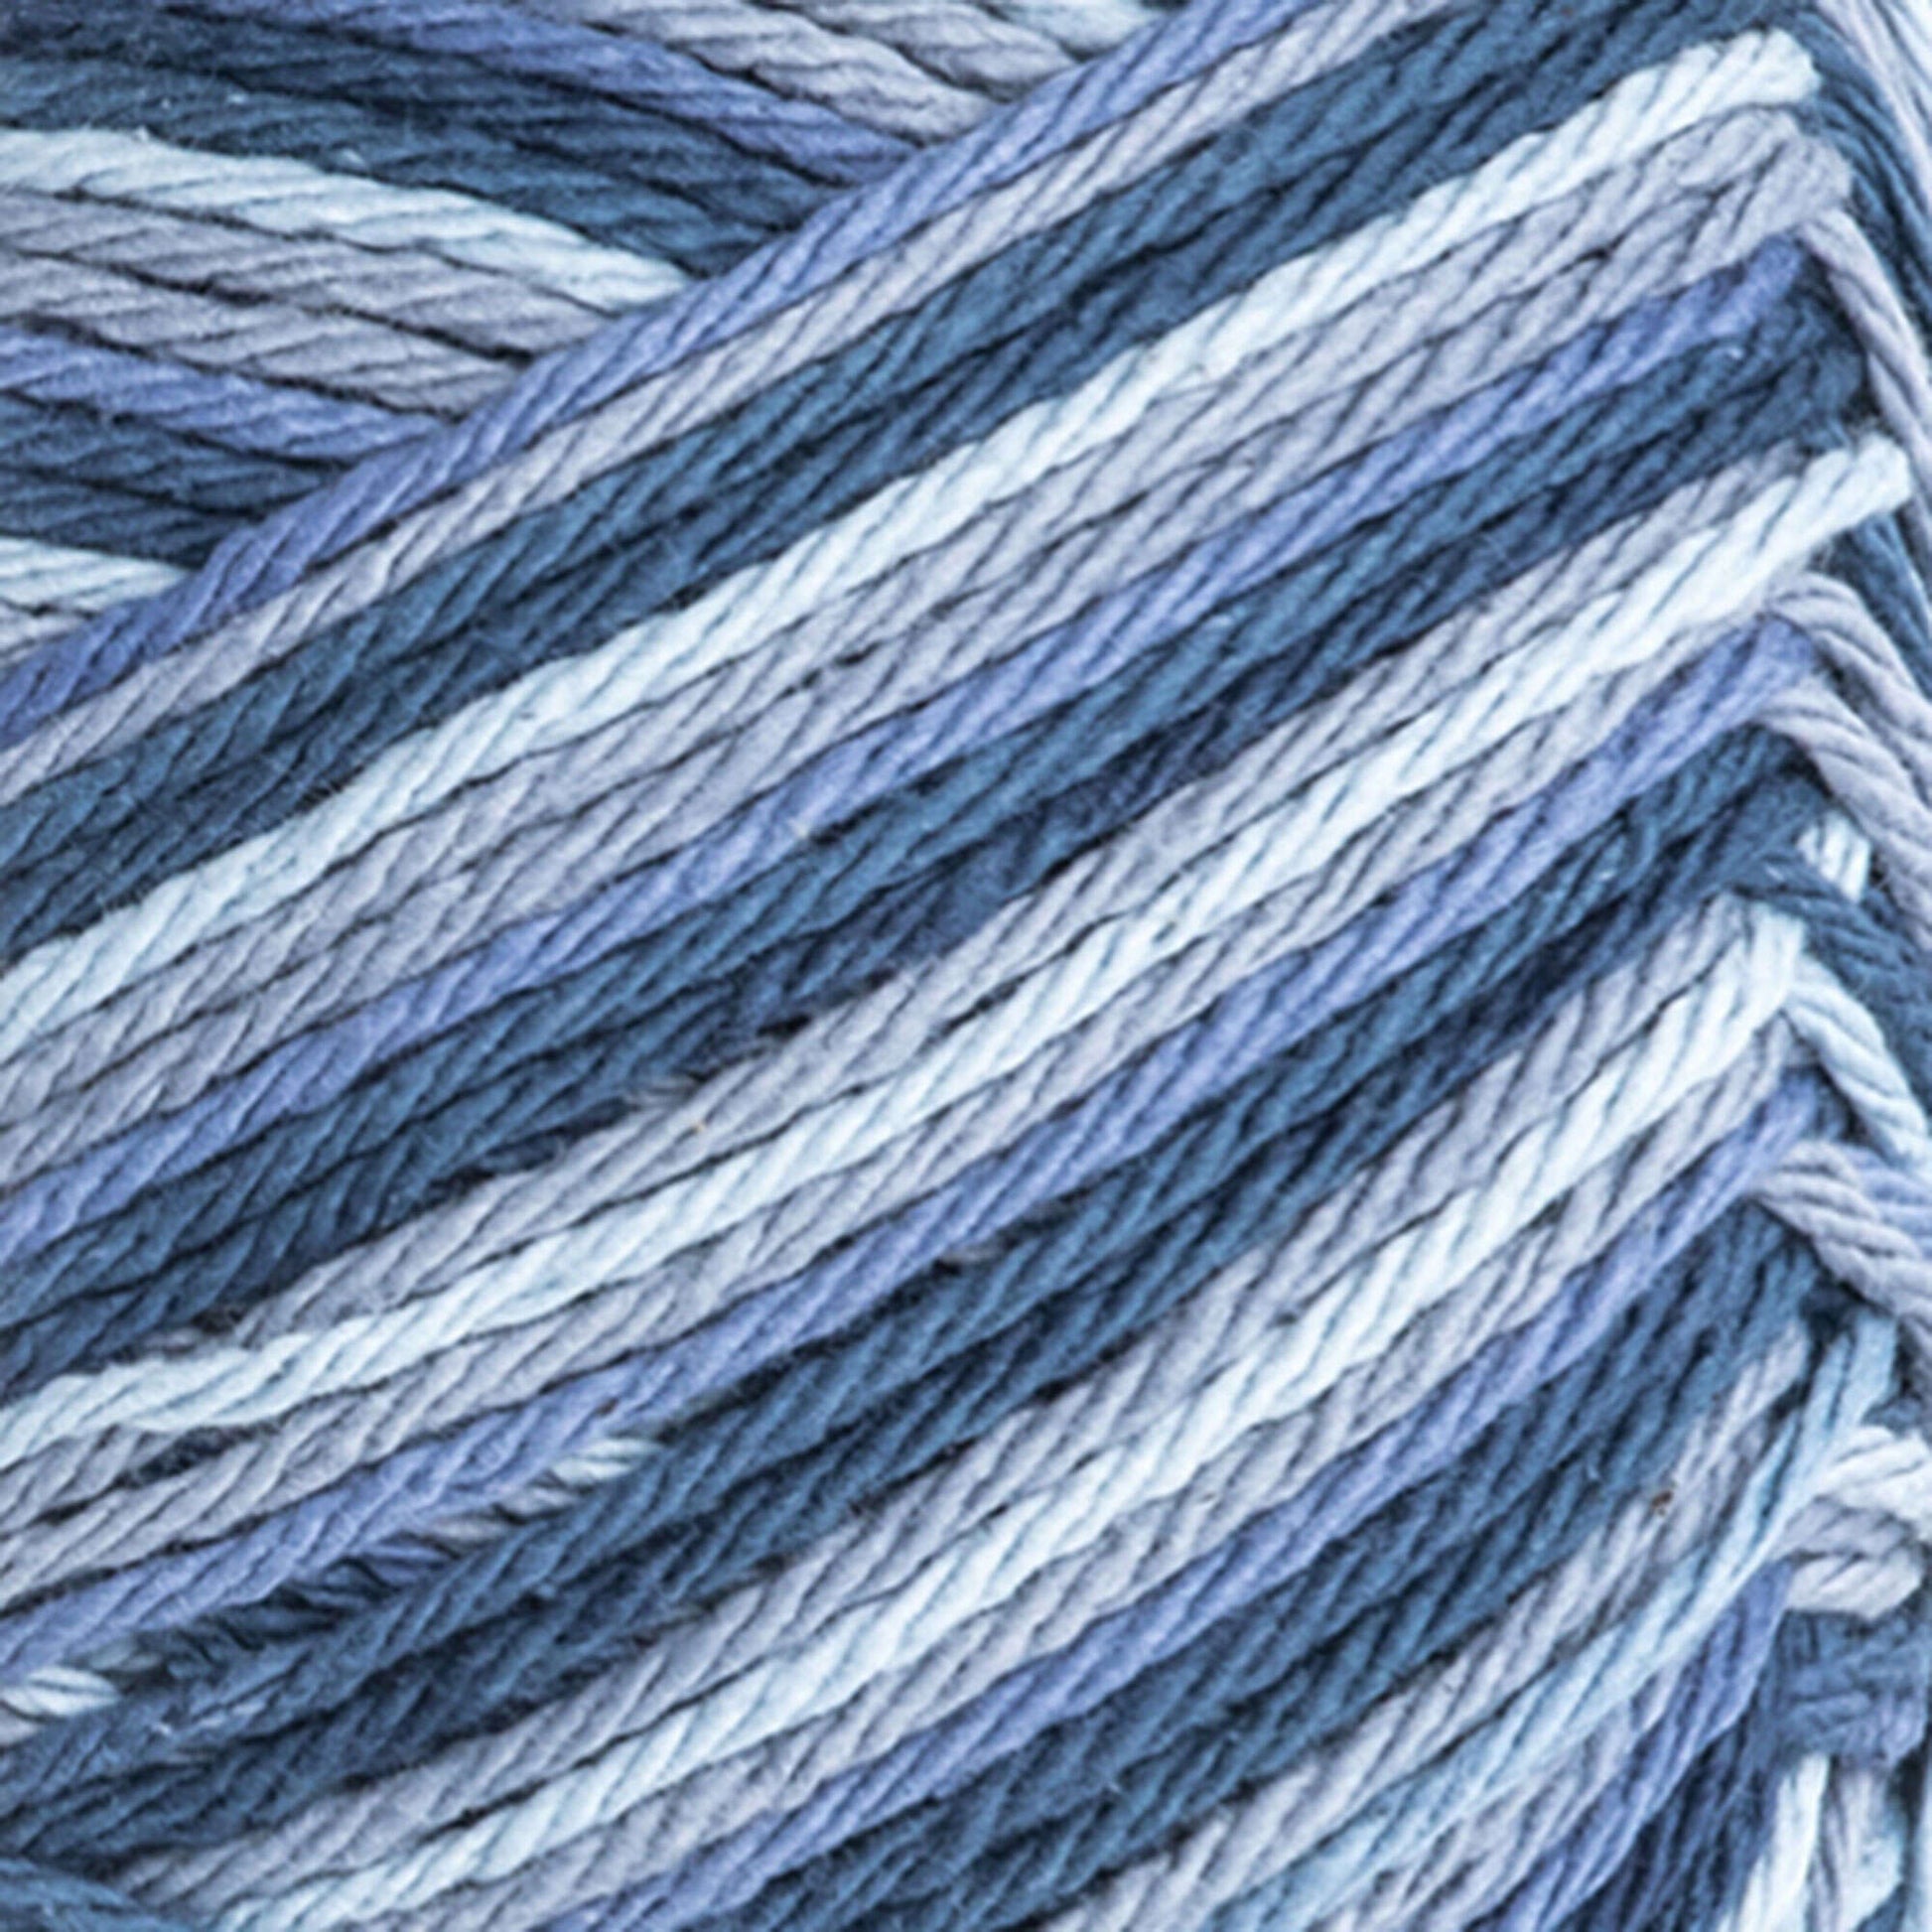 Bernat Handicrafter Cotton Ombres Yarn (340g/12oz) Blue Camo